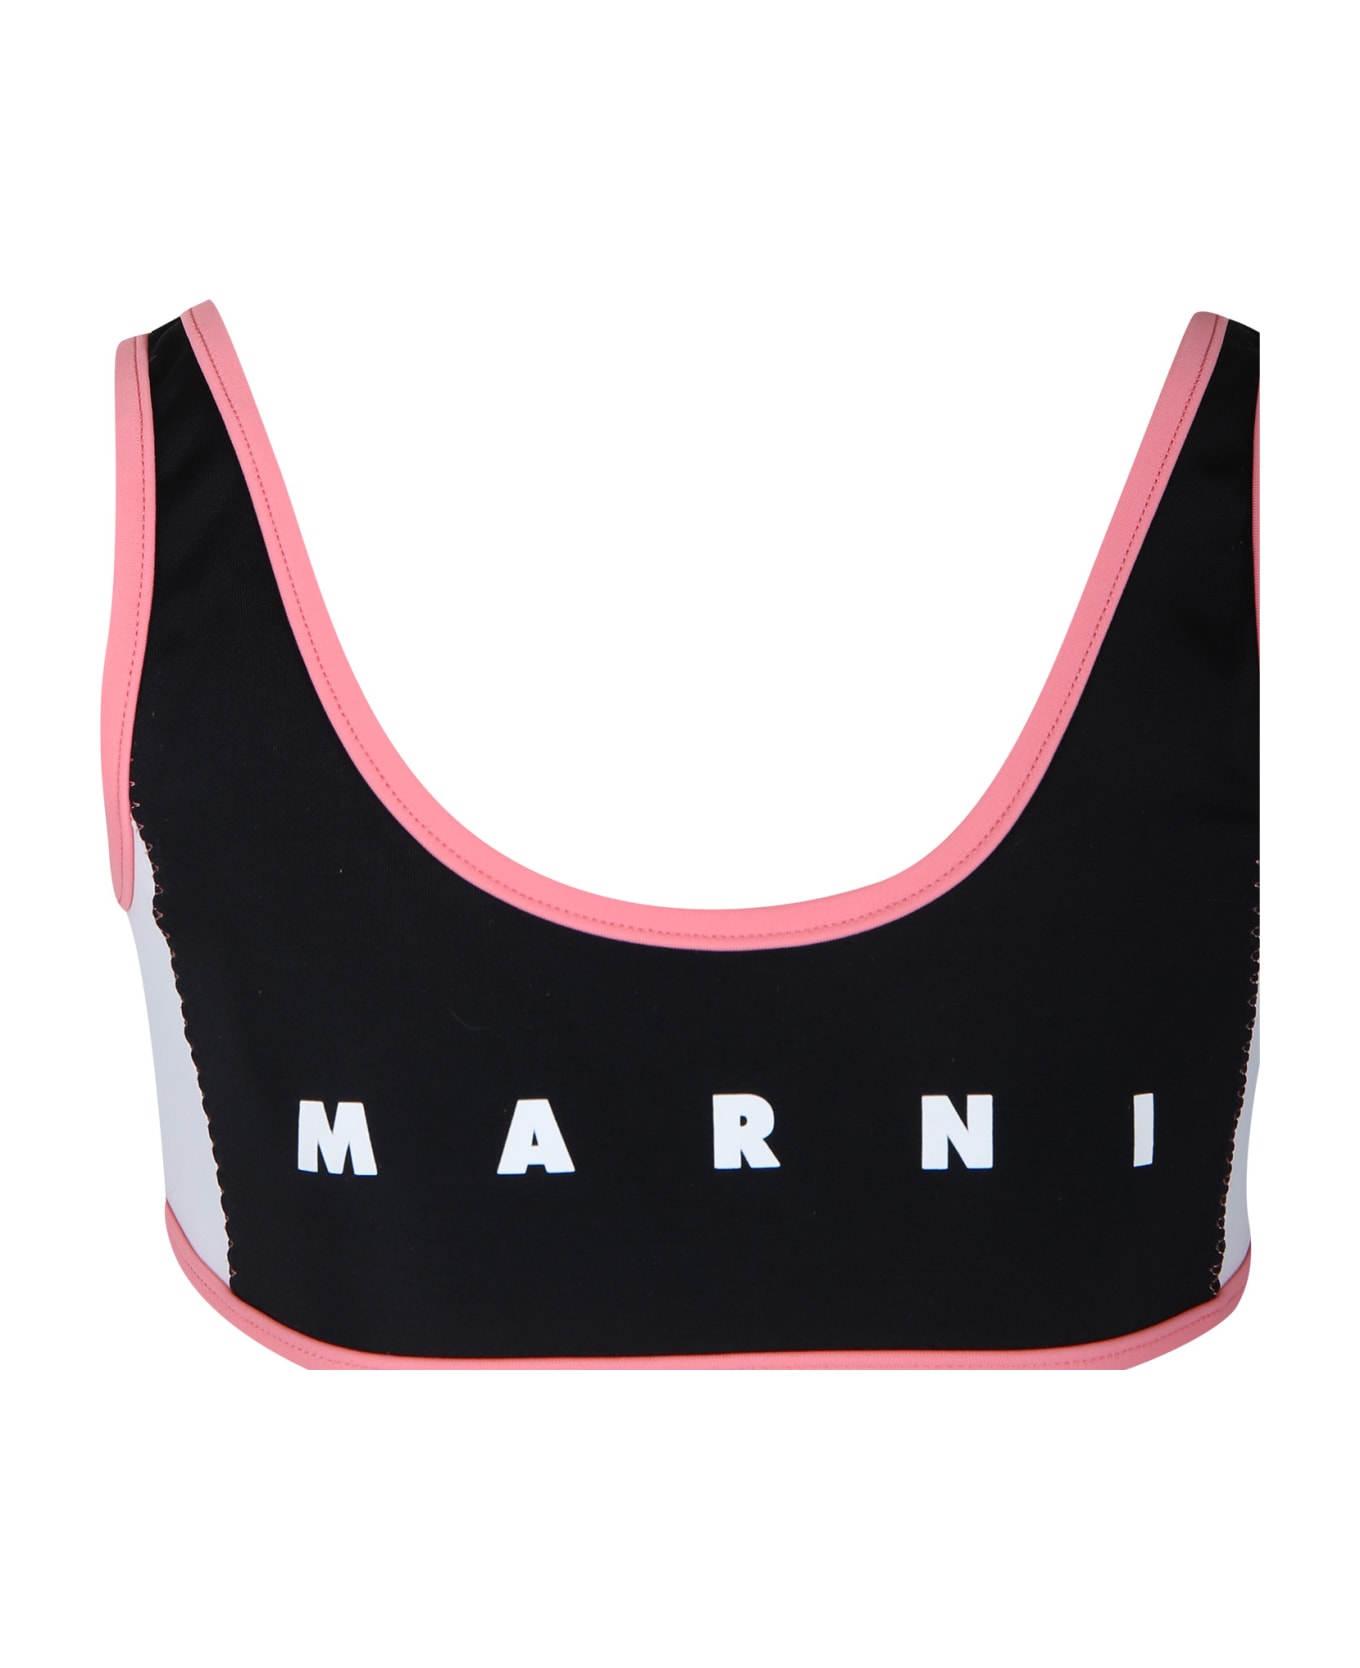 Marni Black Bikini For Girl With Logo - Black